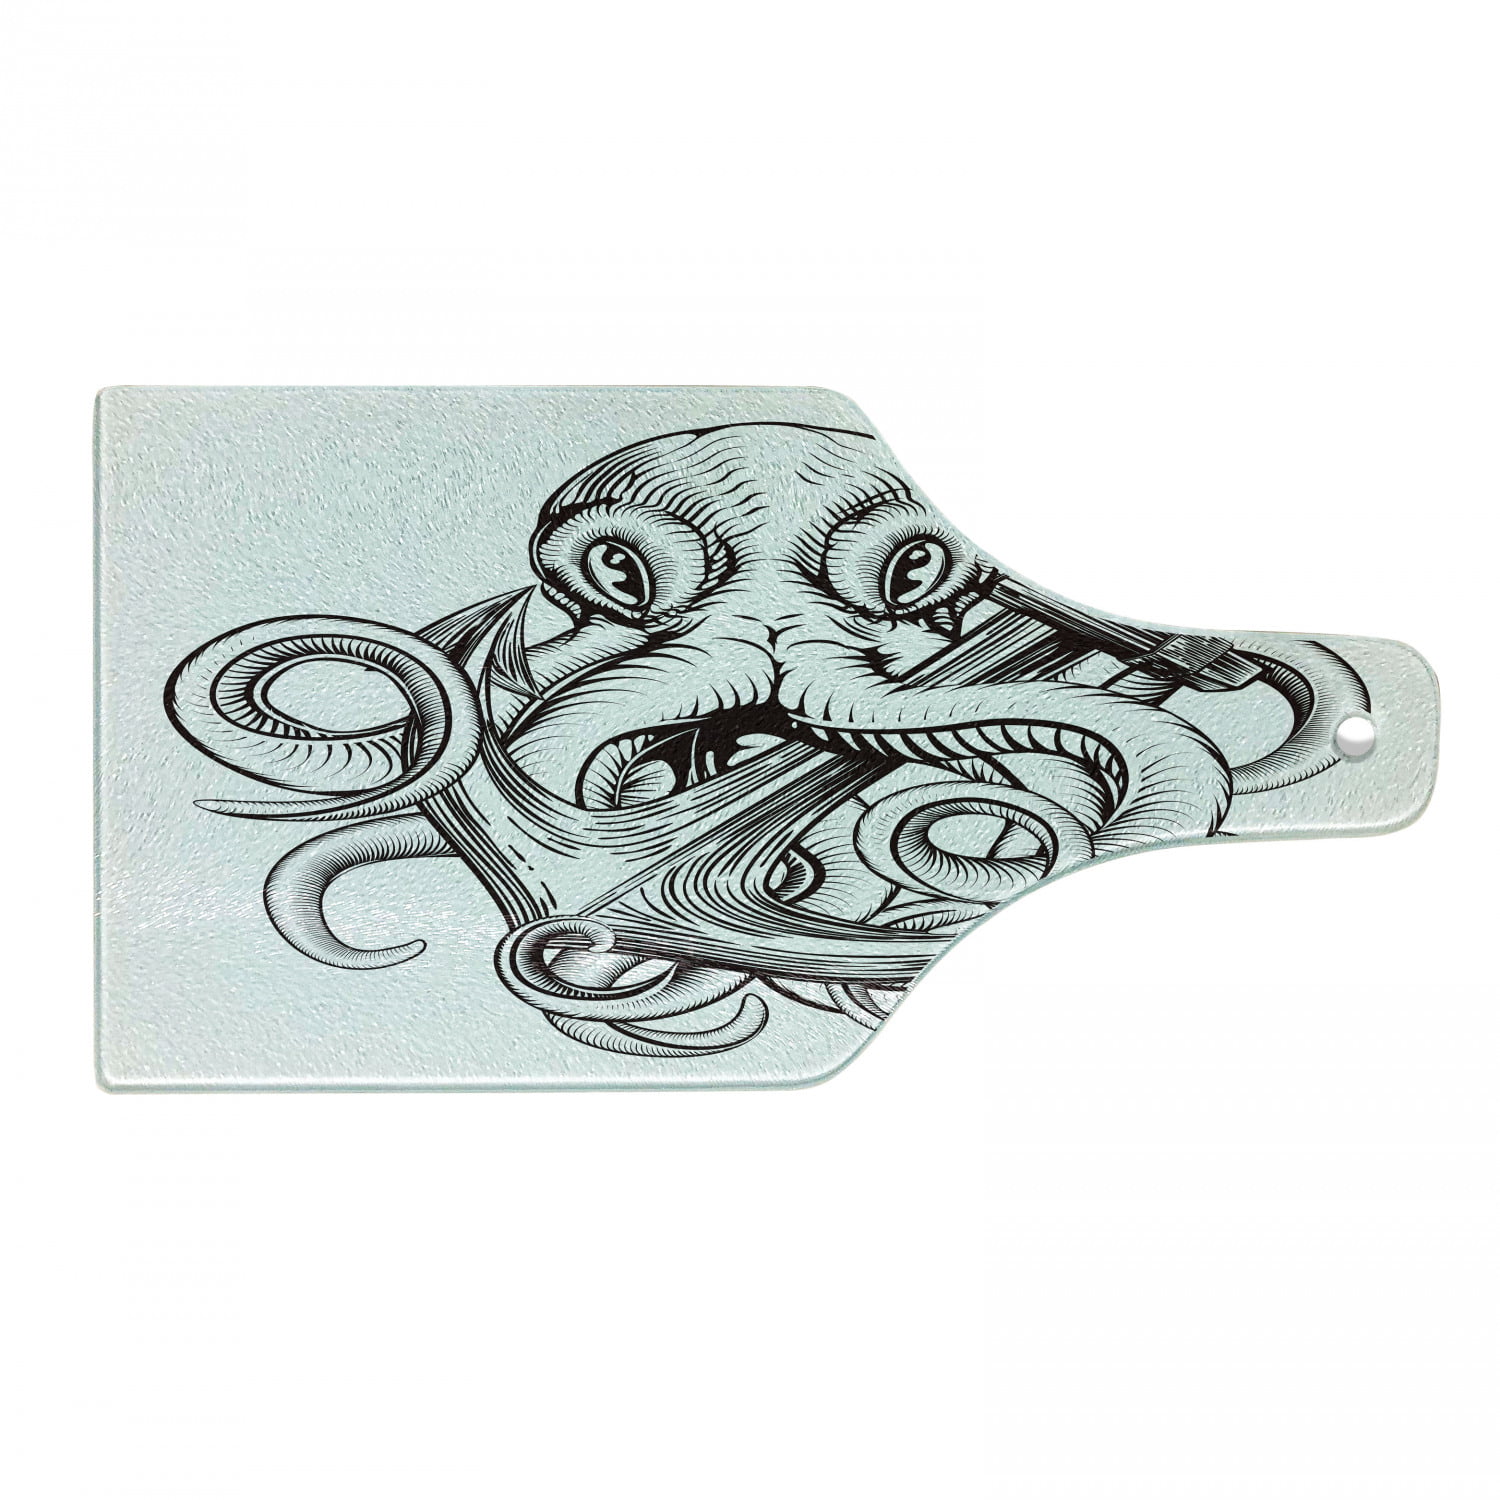 Octopus Tentacles Bamboo Cutting Board - Large (11x14) - Dark Fox Design